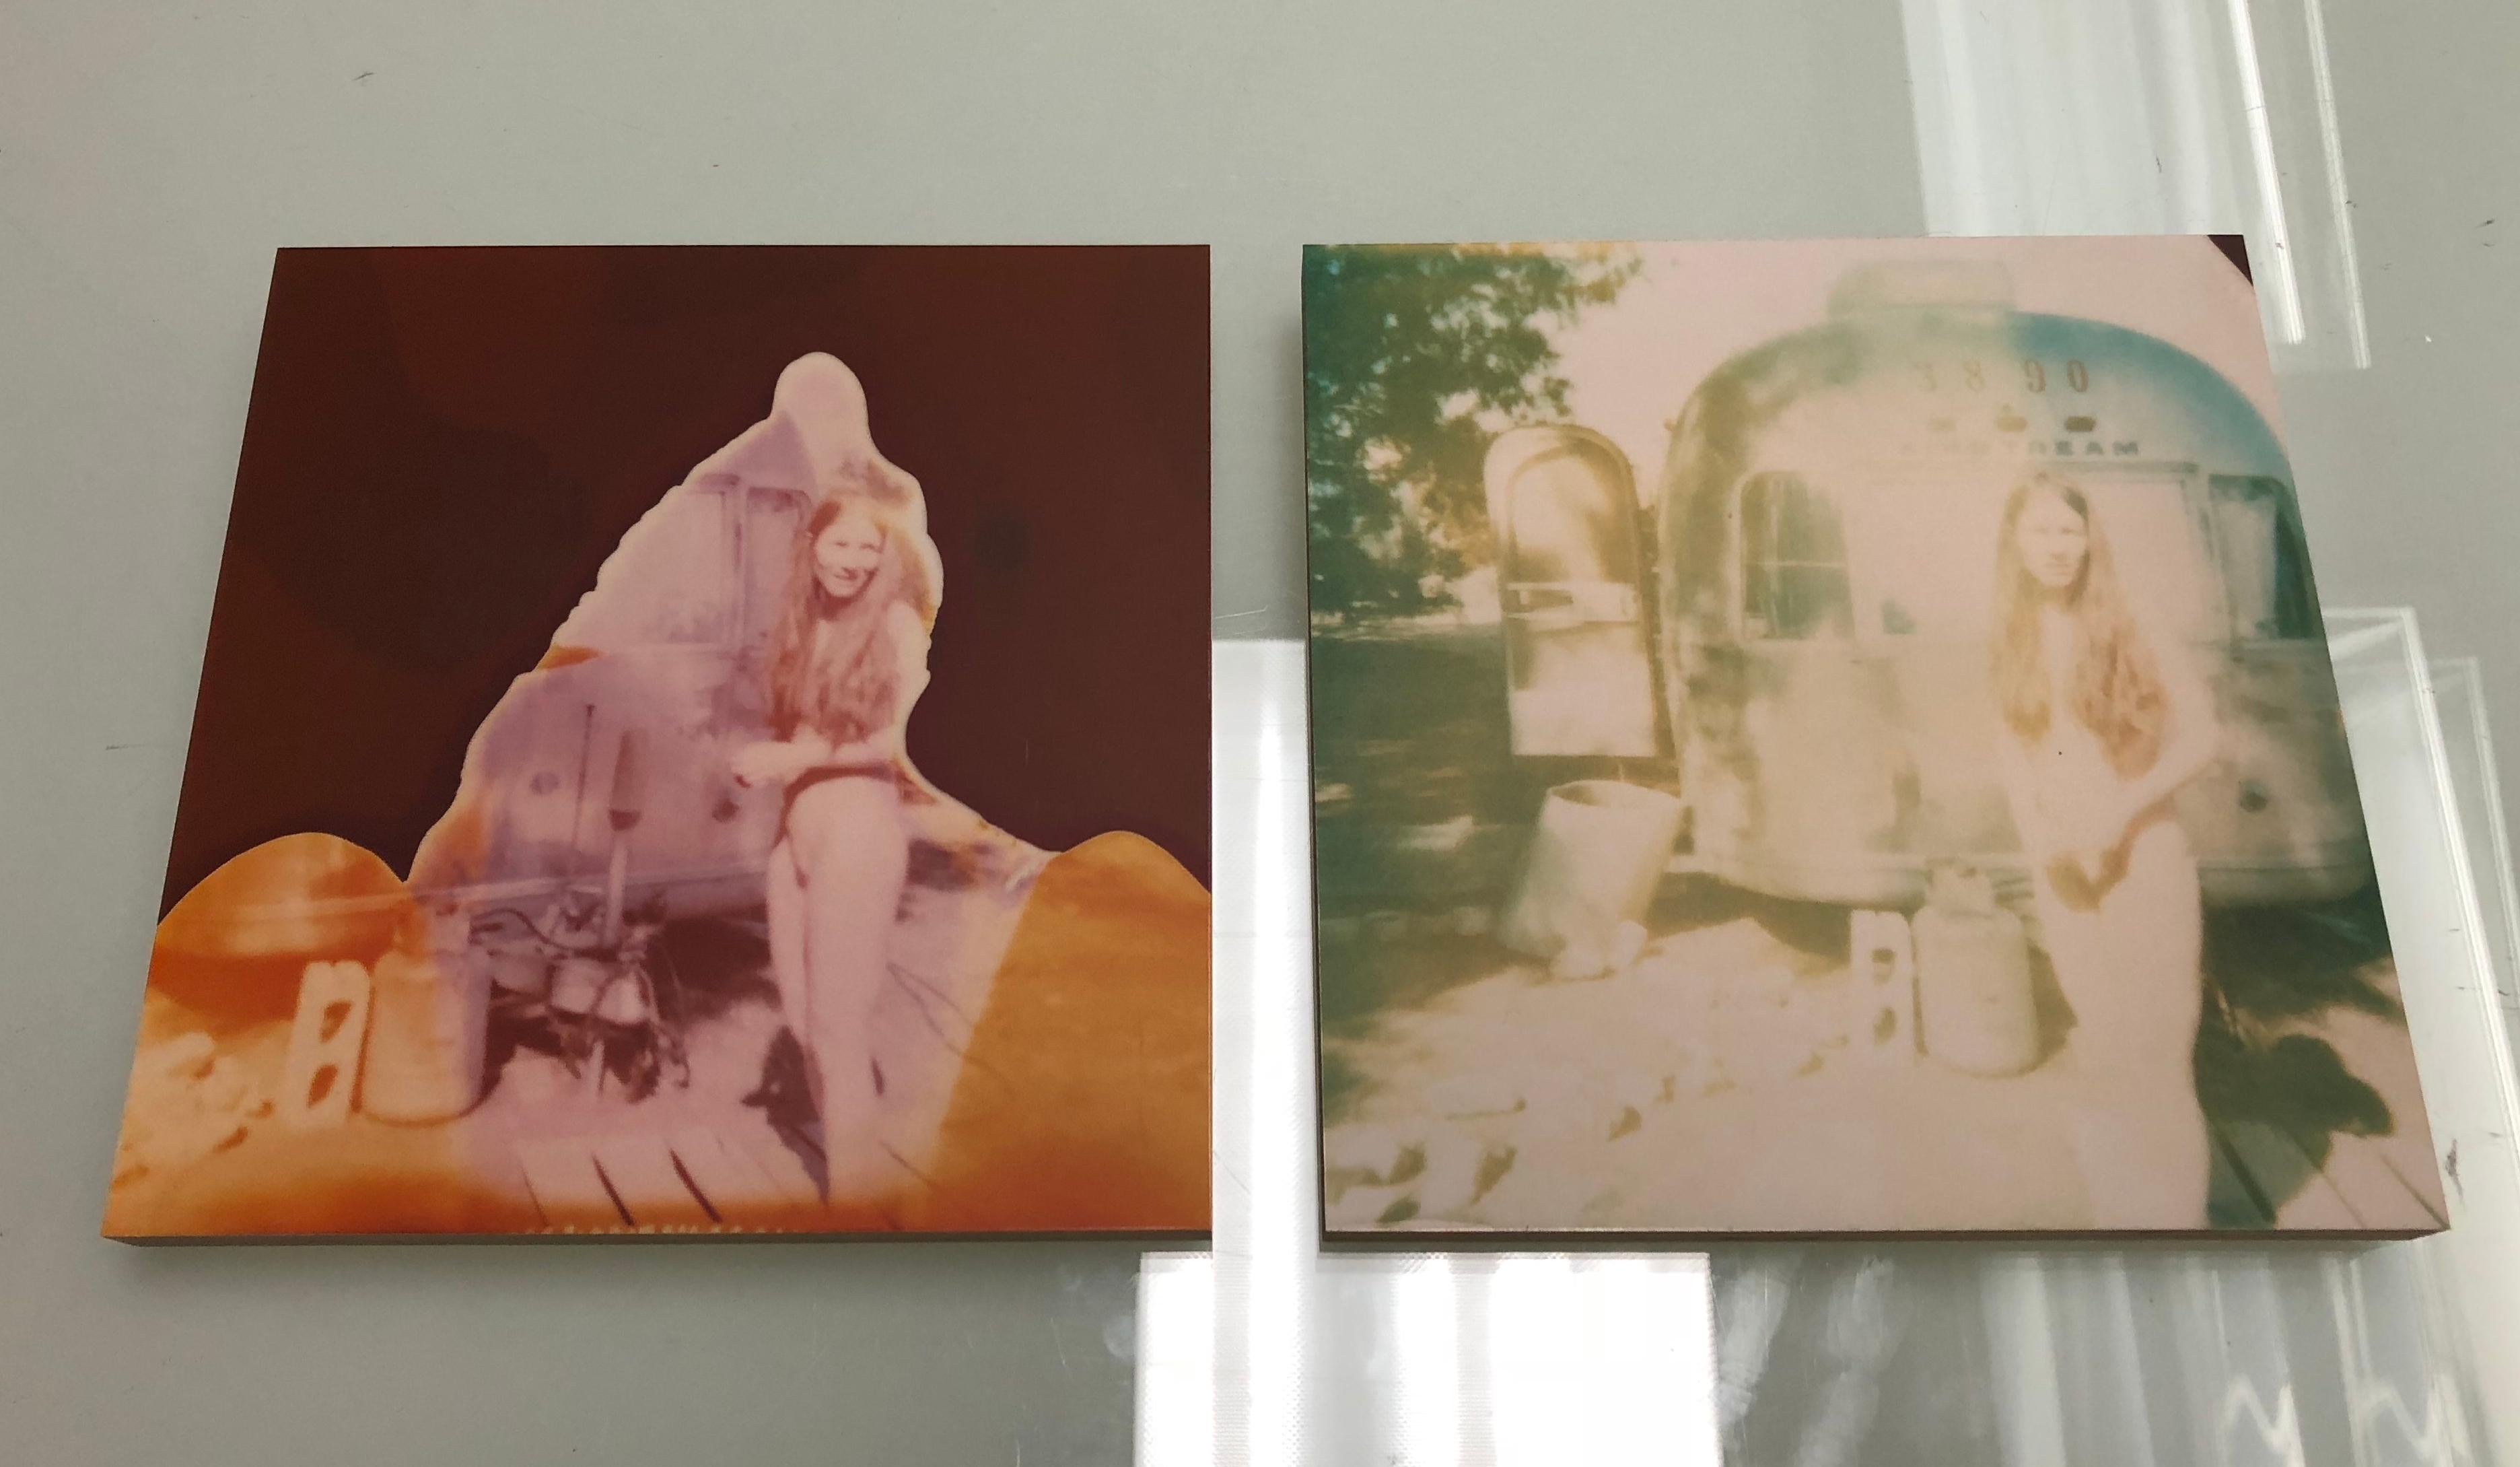 Stefanie Schneider Color Photograph - In front of Trailer (Sidewinder), diptych - Polaroid, Nude, Contemporary, Analog